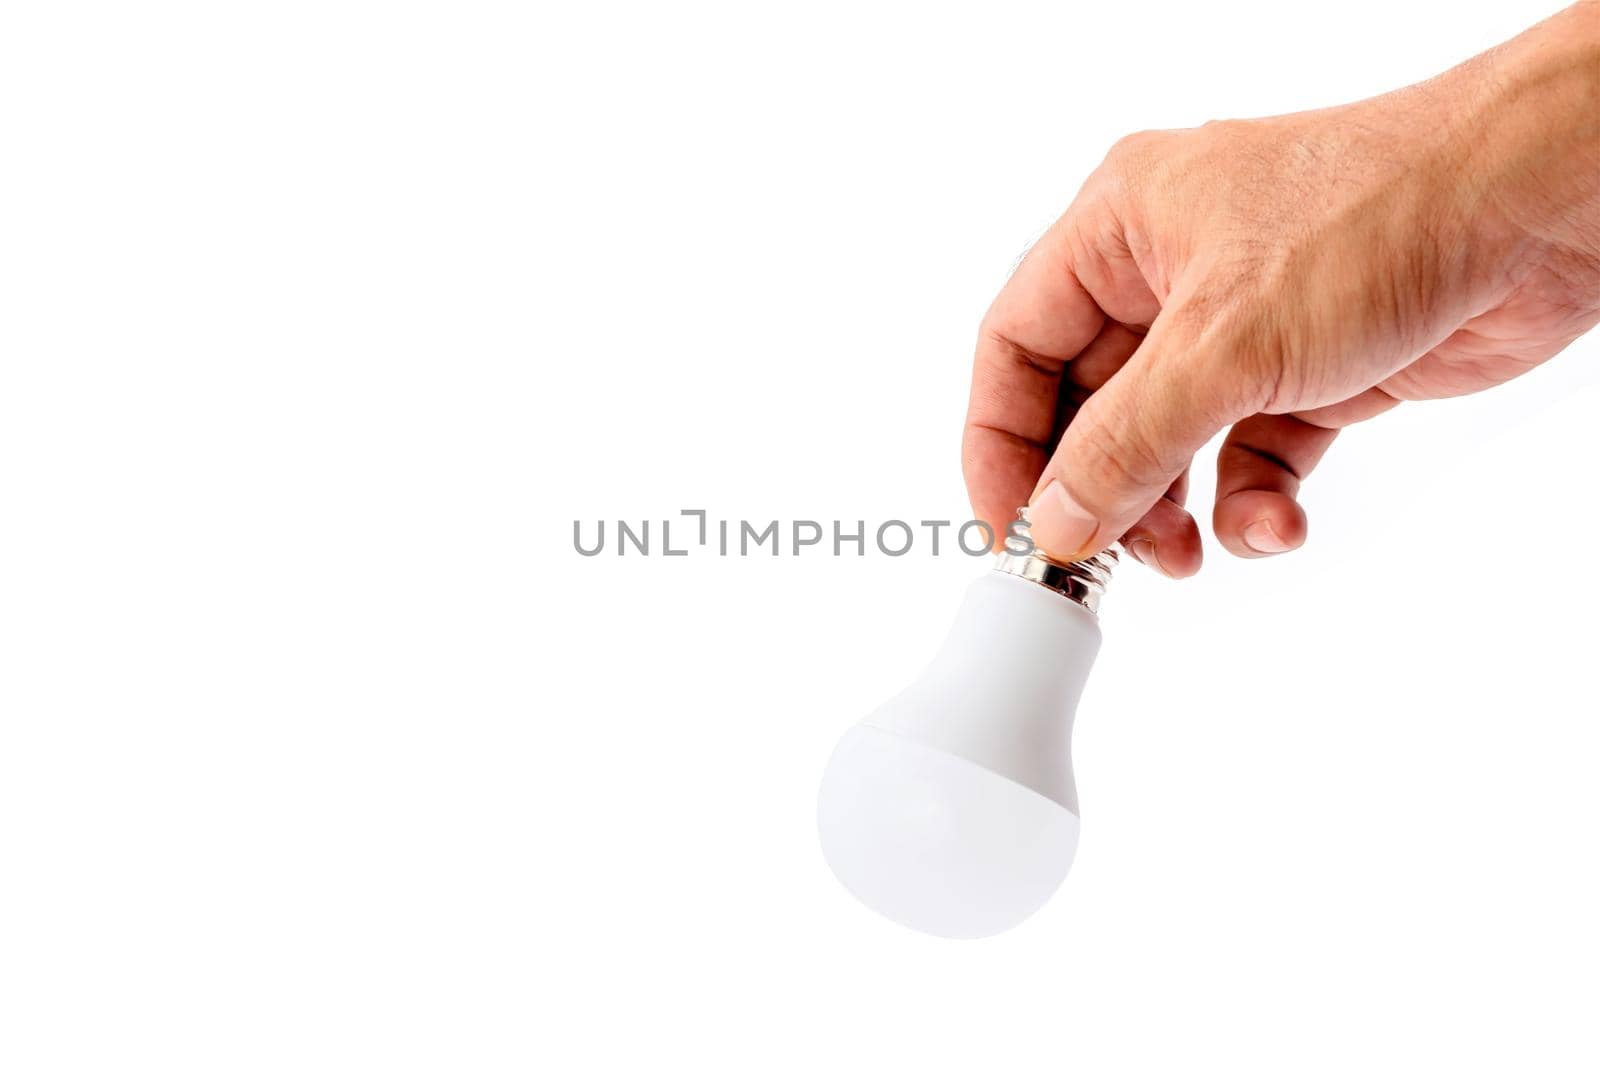 Human hand holding LED light bulb isolated on white background. by wattanaphob